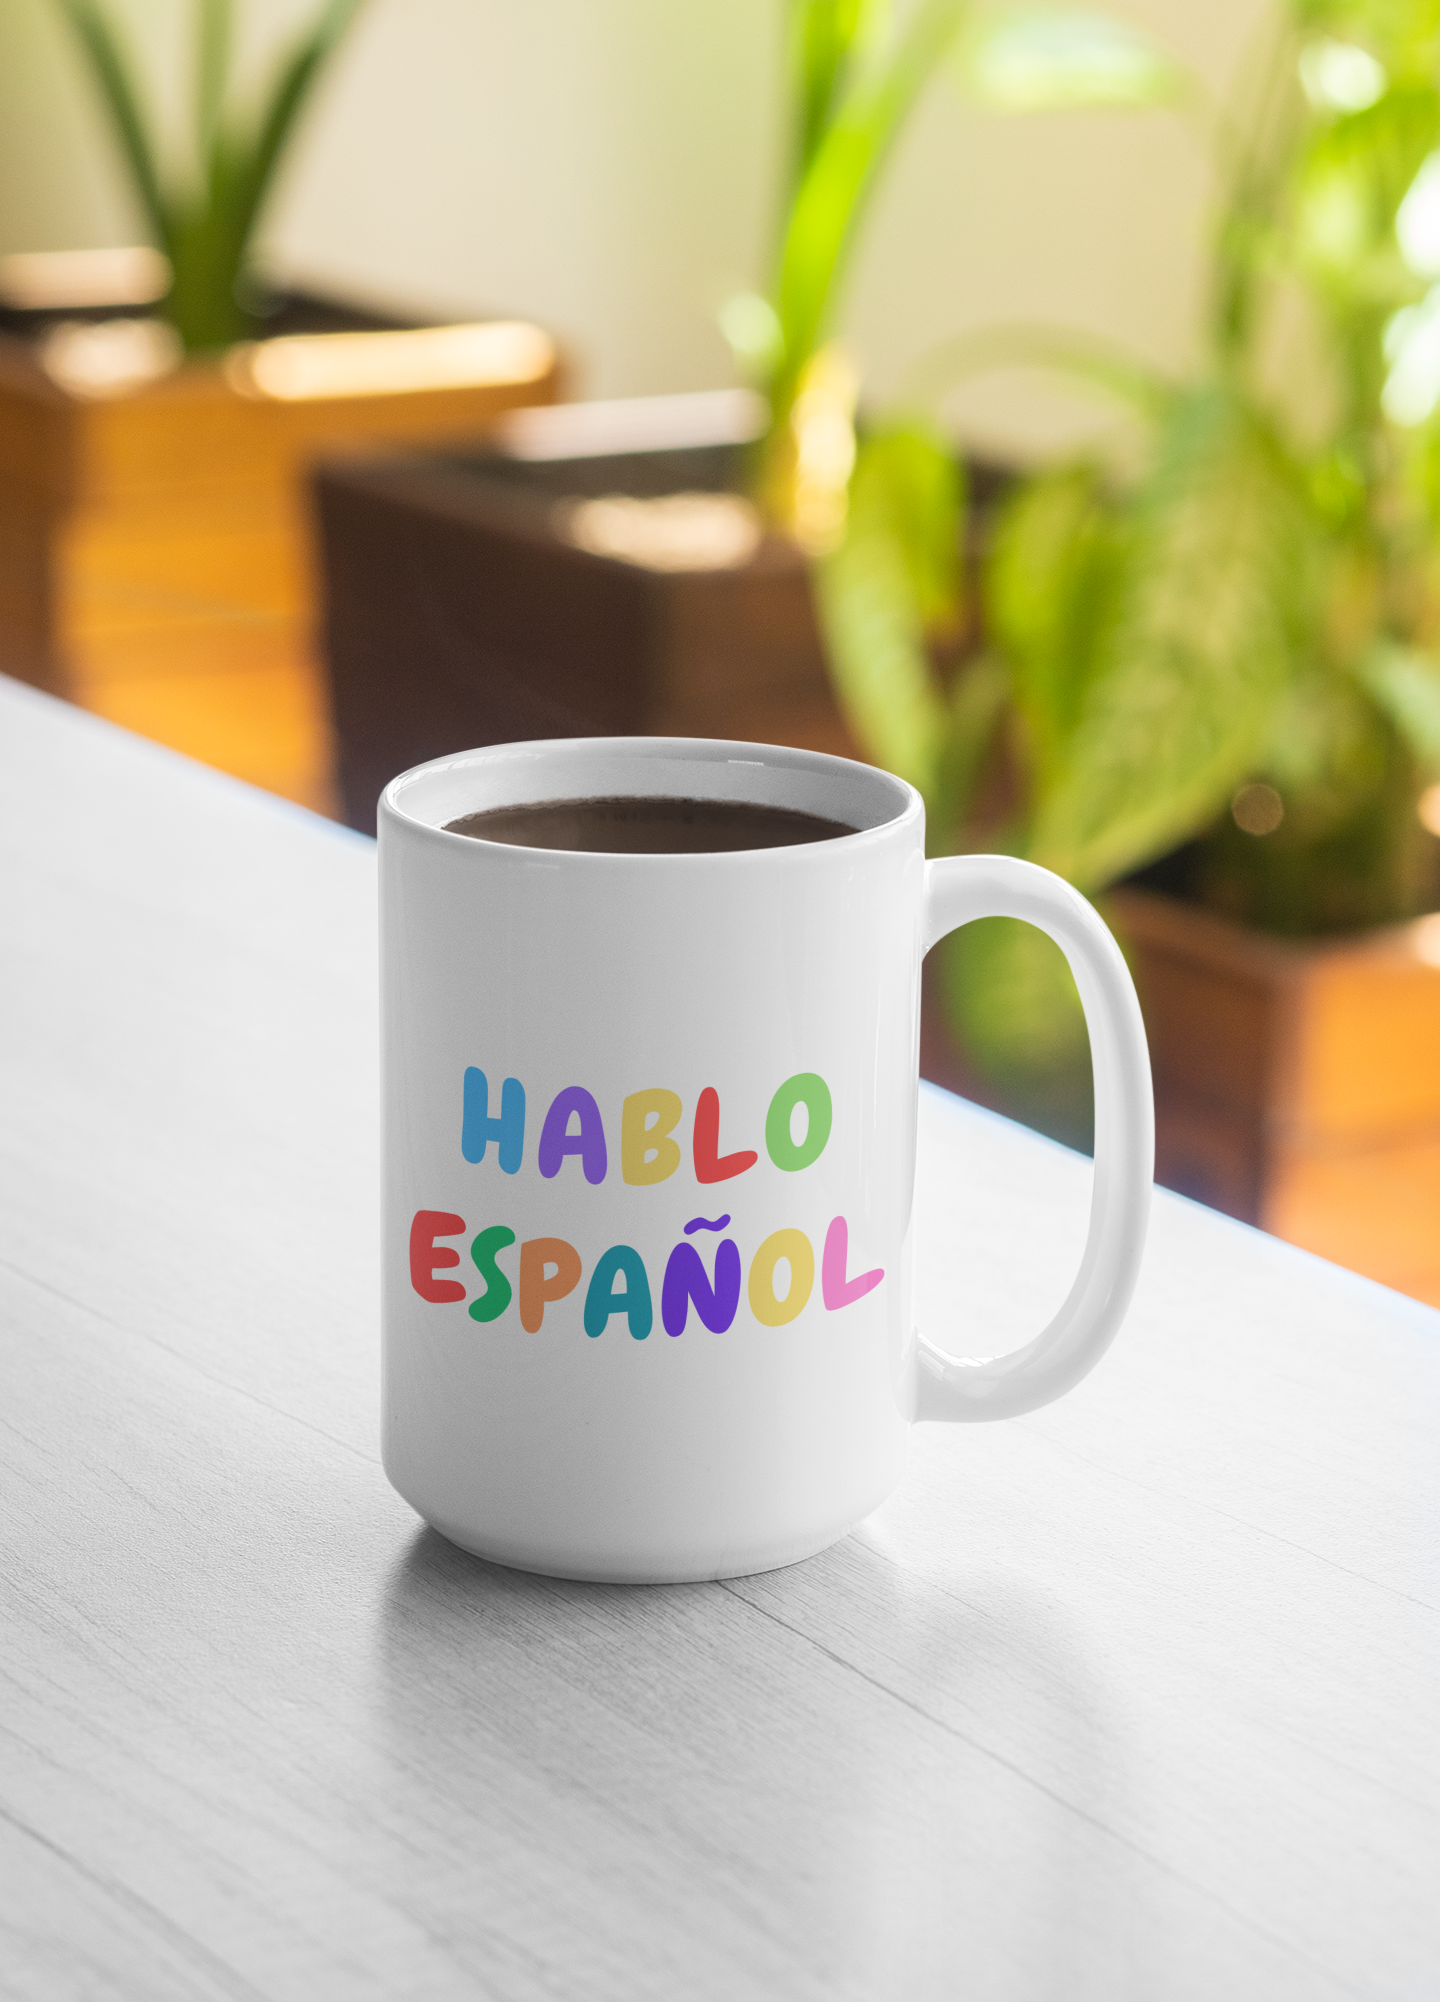 15oz 'HABLO ESPANOL' Mug for Teachers | Bilingual Educator Drinkware | Language Pride